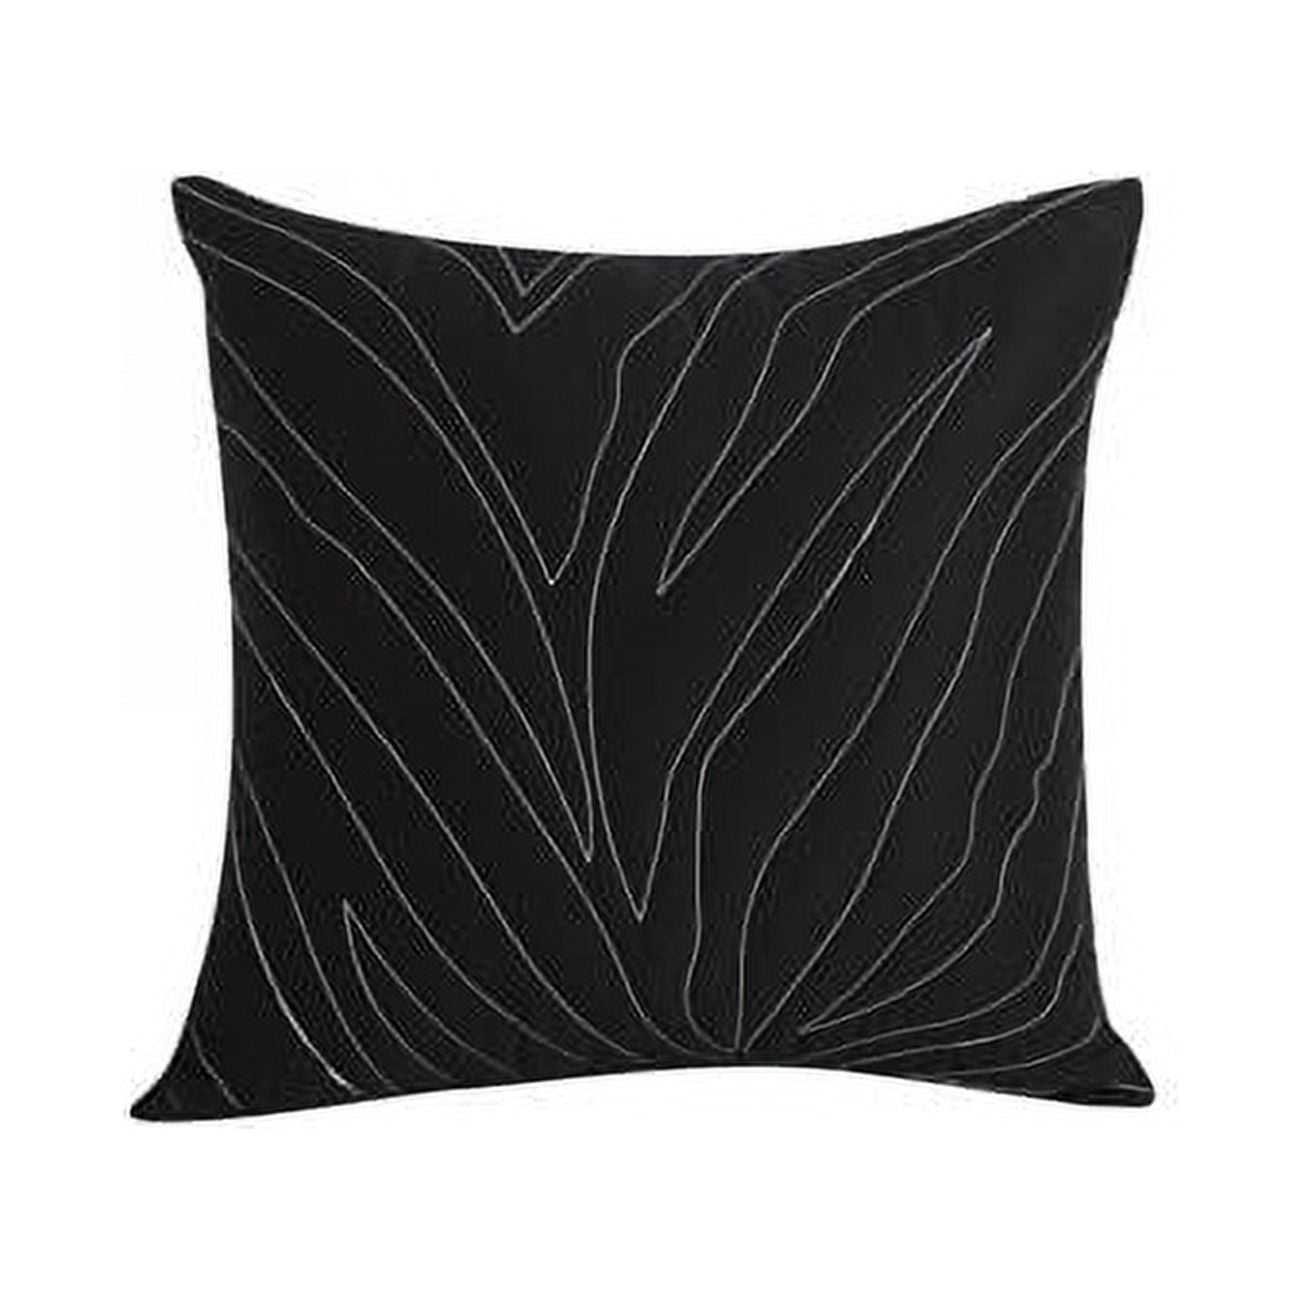 Kensie Kara 5702 Euro Sham Pillow Cover Case Stripe 26 W X 26 L Grey And Black